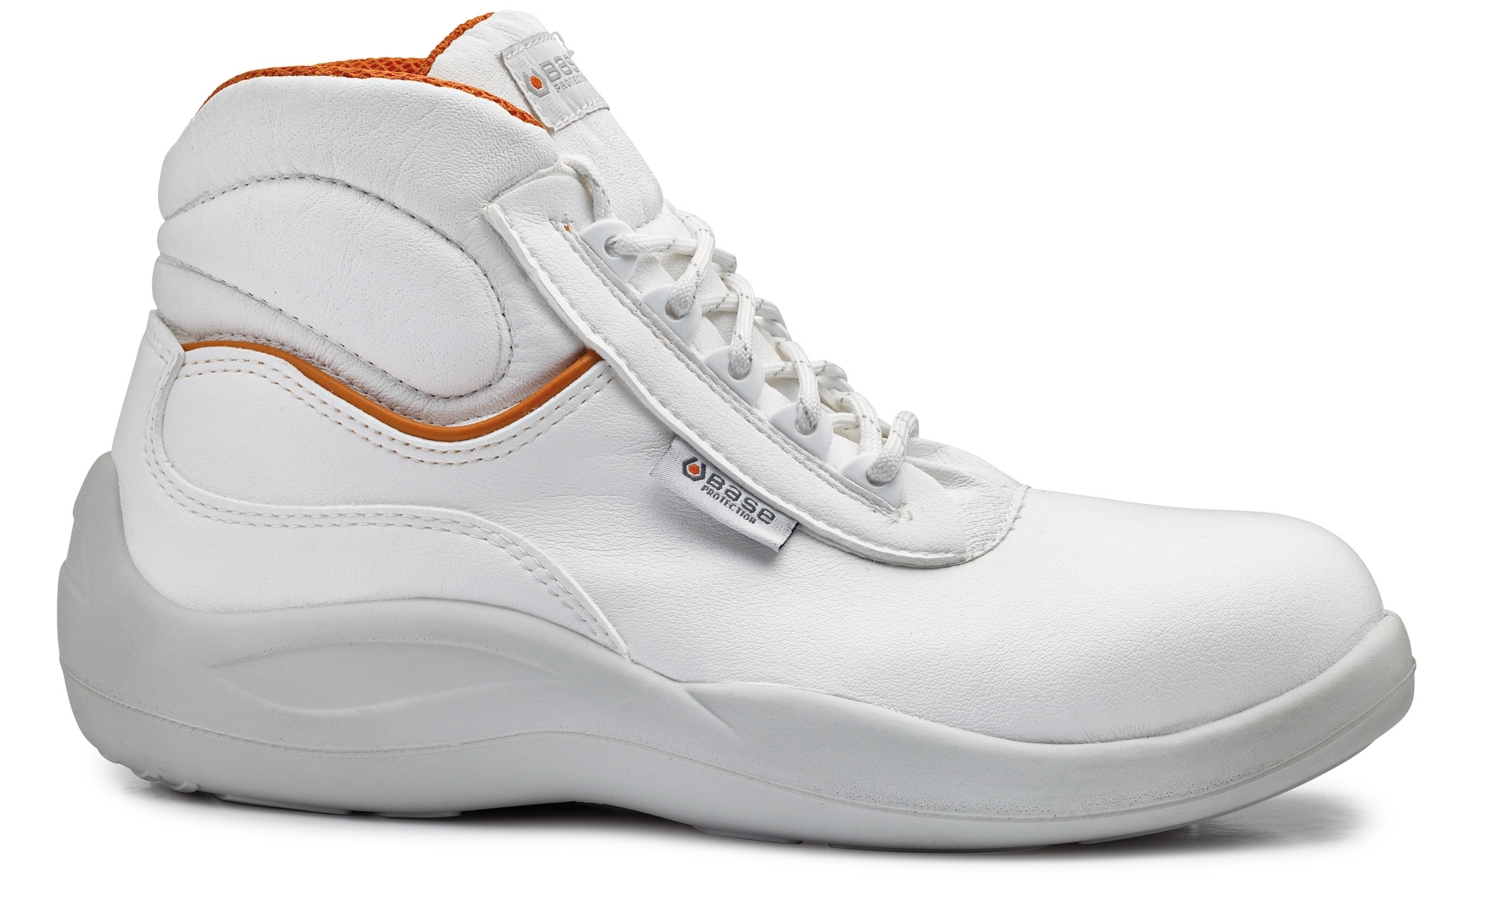 Chaussures hautes Zinco B0502 - Blanc Base Protection